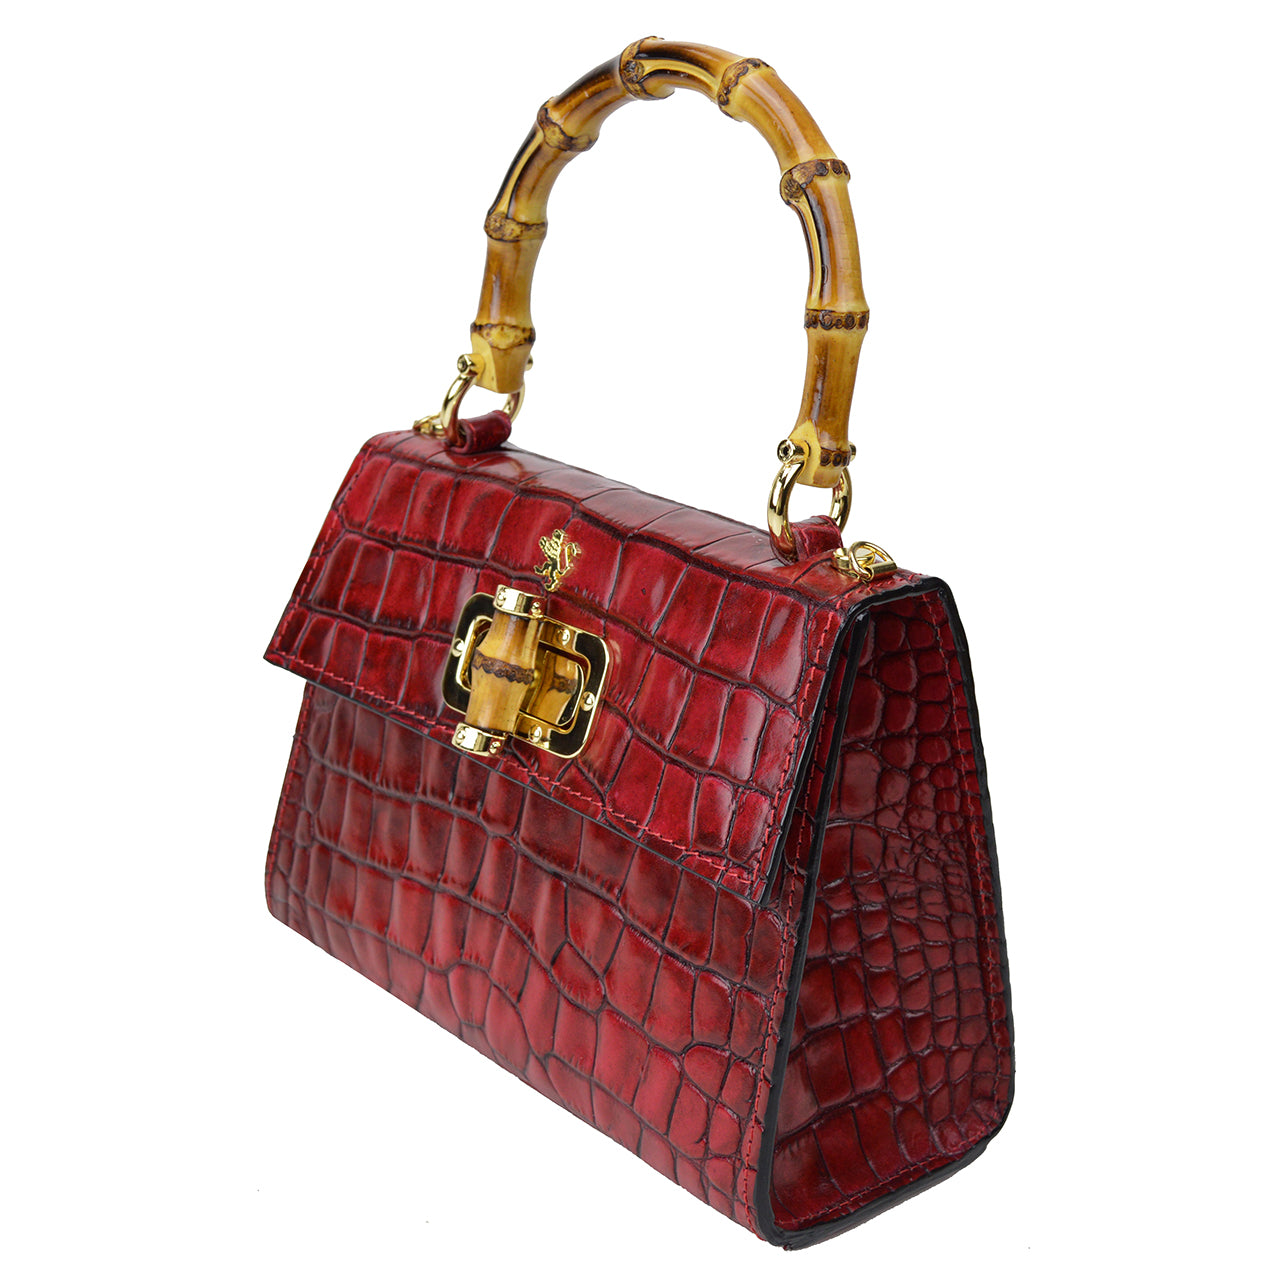 Pratesi Castalia Lady Bag in genuine Italian leather